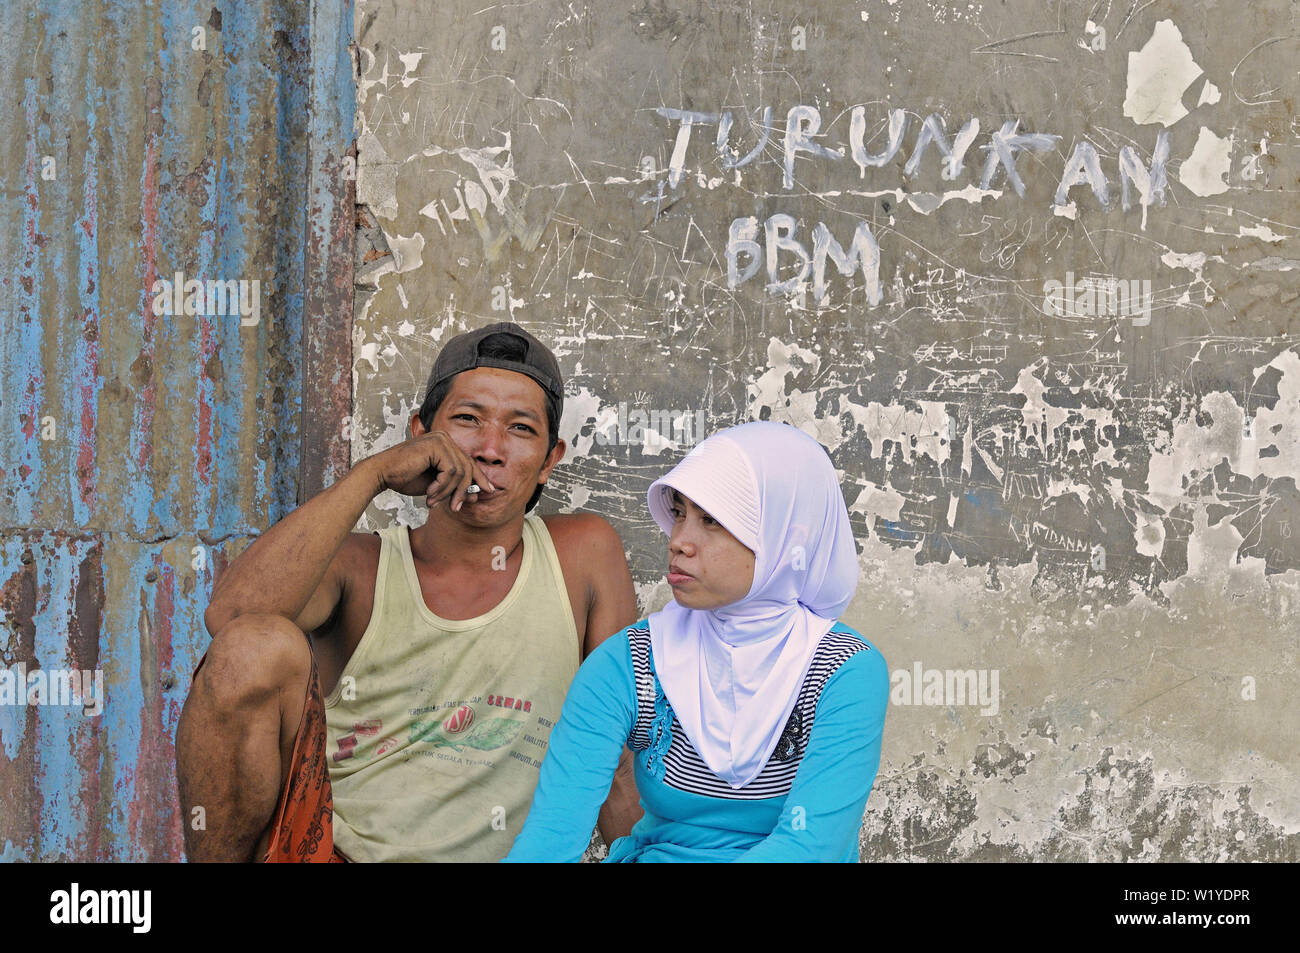 surabaya, jawa timur/indonesia - may 10, 2010: a young couple enjoying togetherness during a work break at kali mas harbour Stock Photo